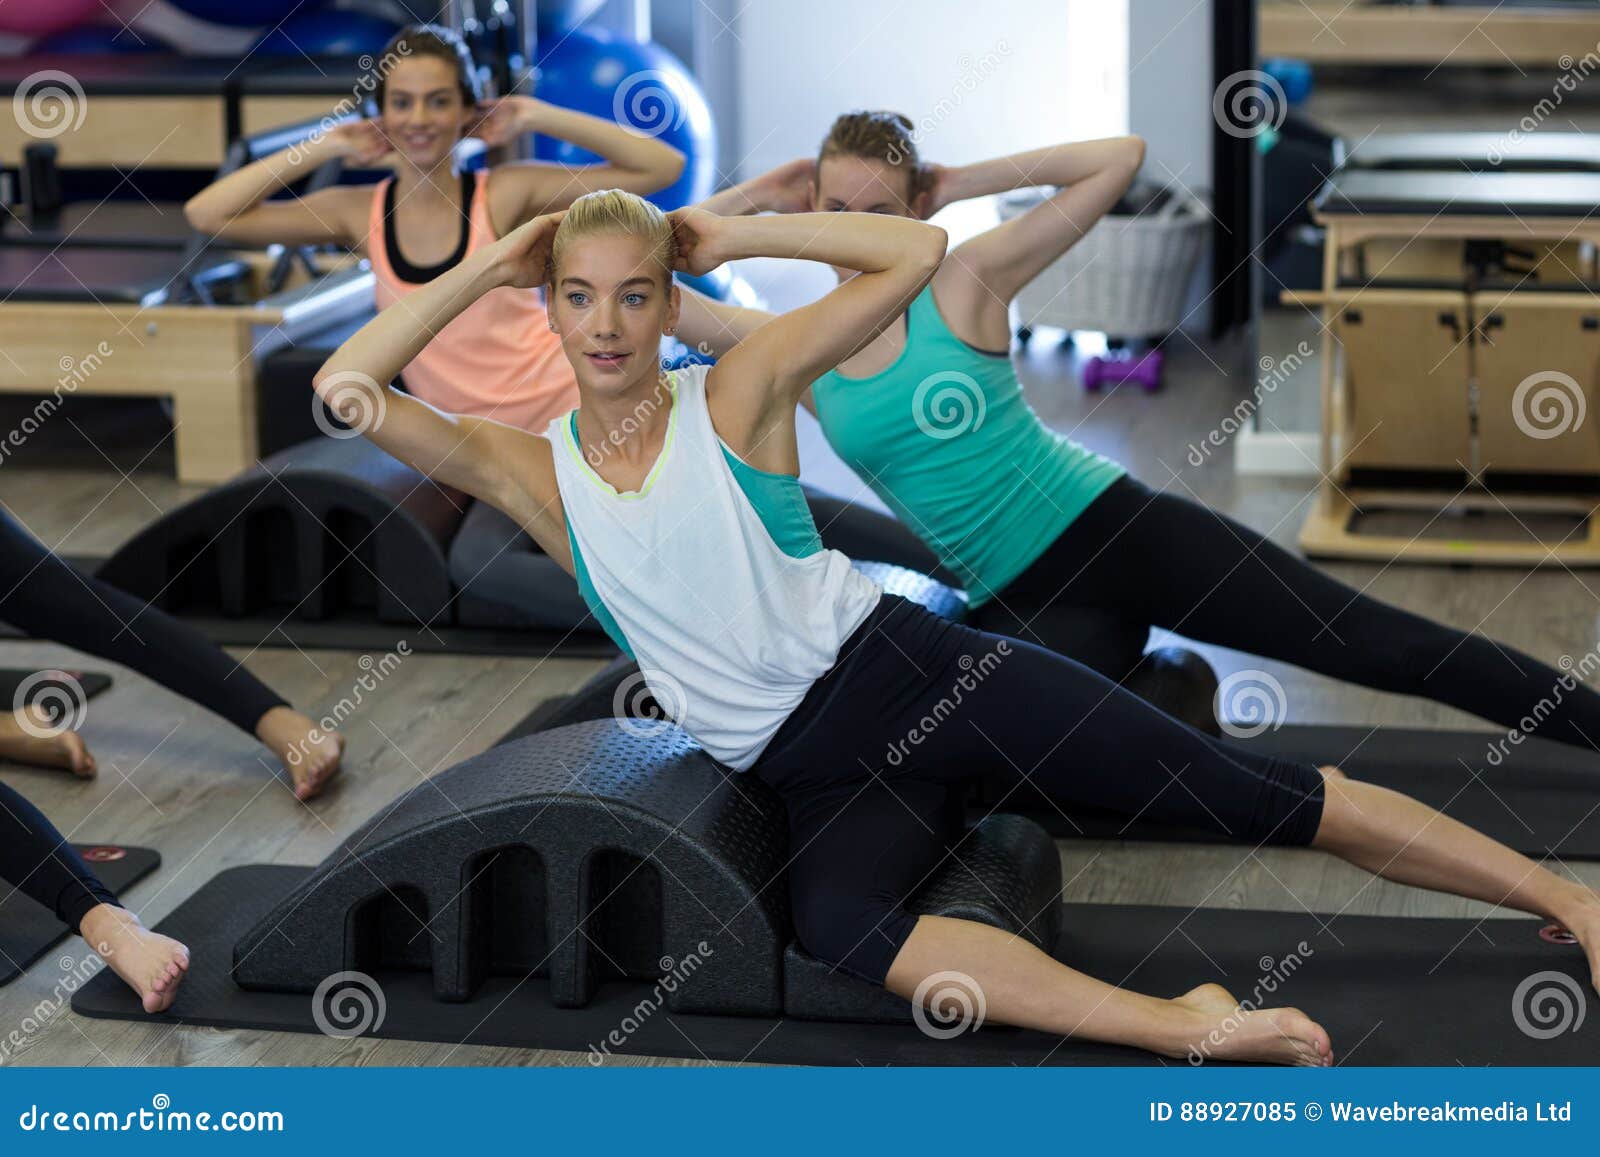 Group of Women Exercising on Arc Barrel Stock Image - Image of